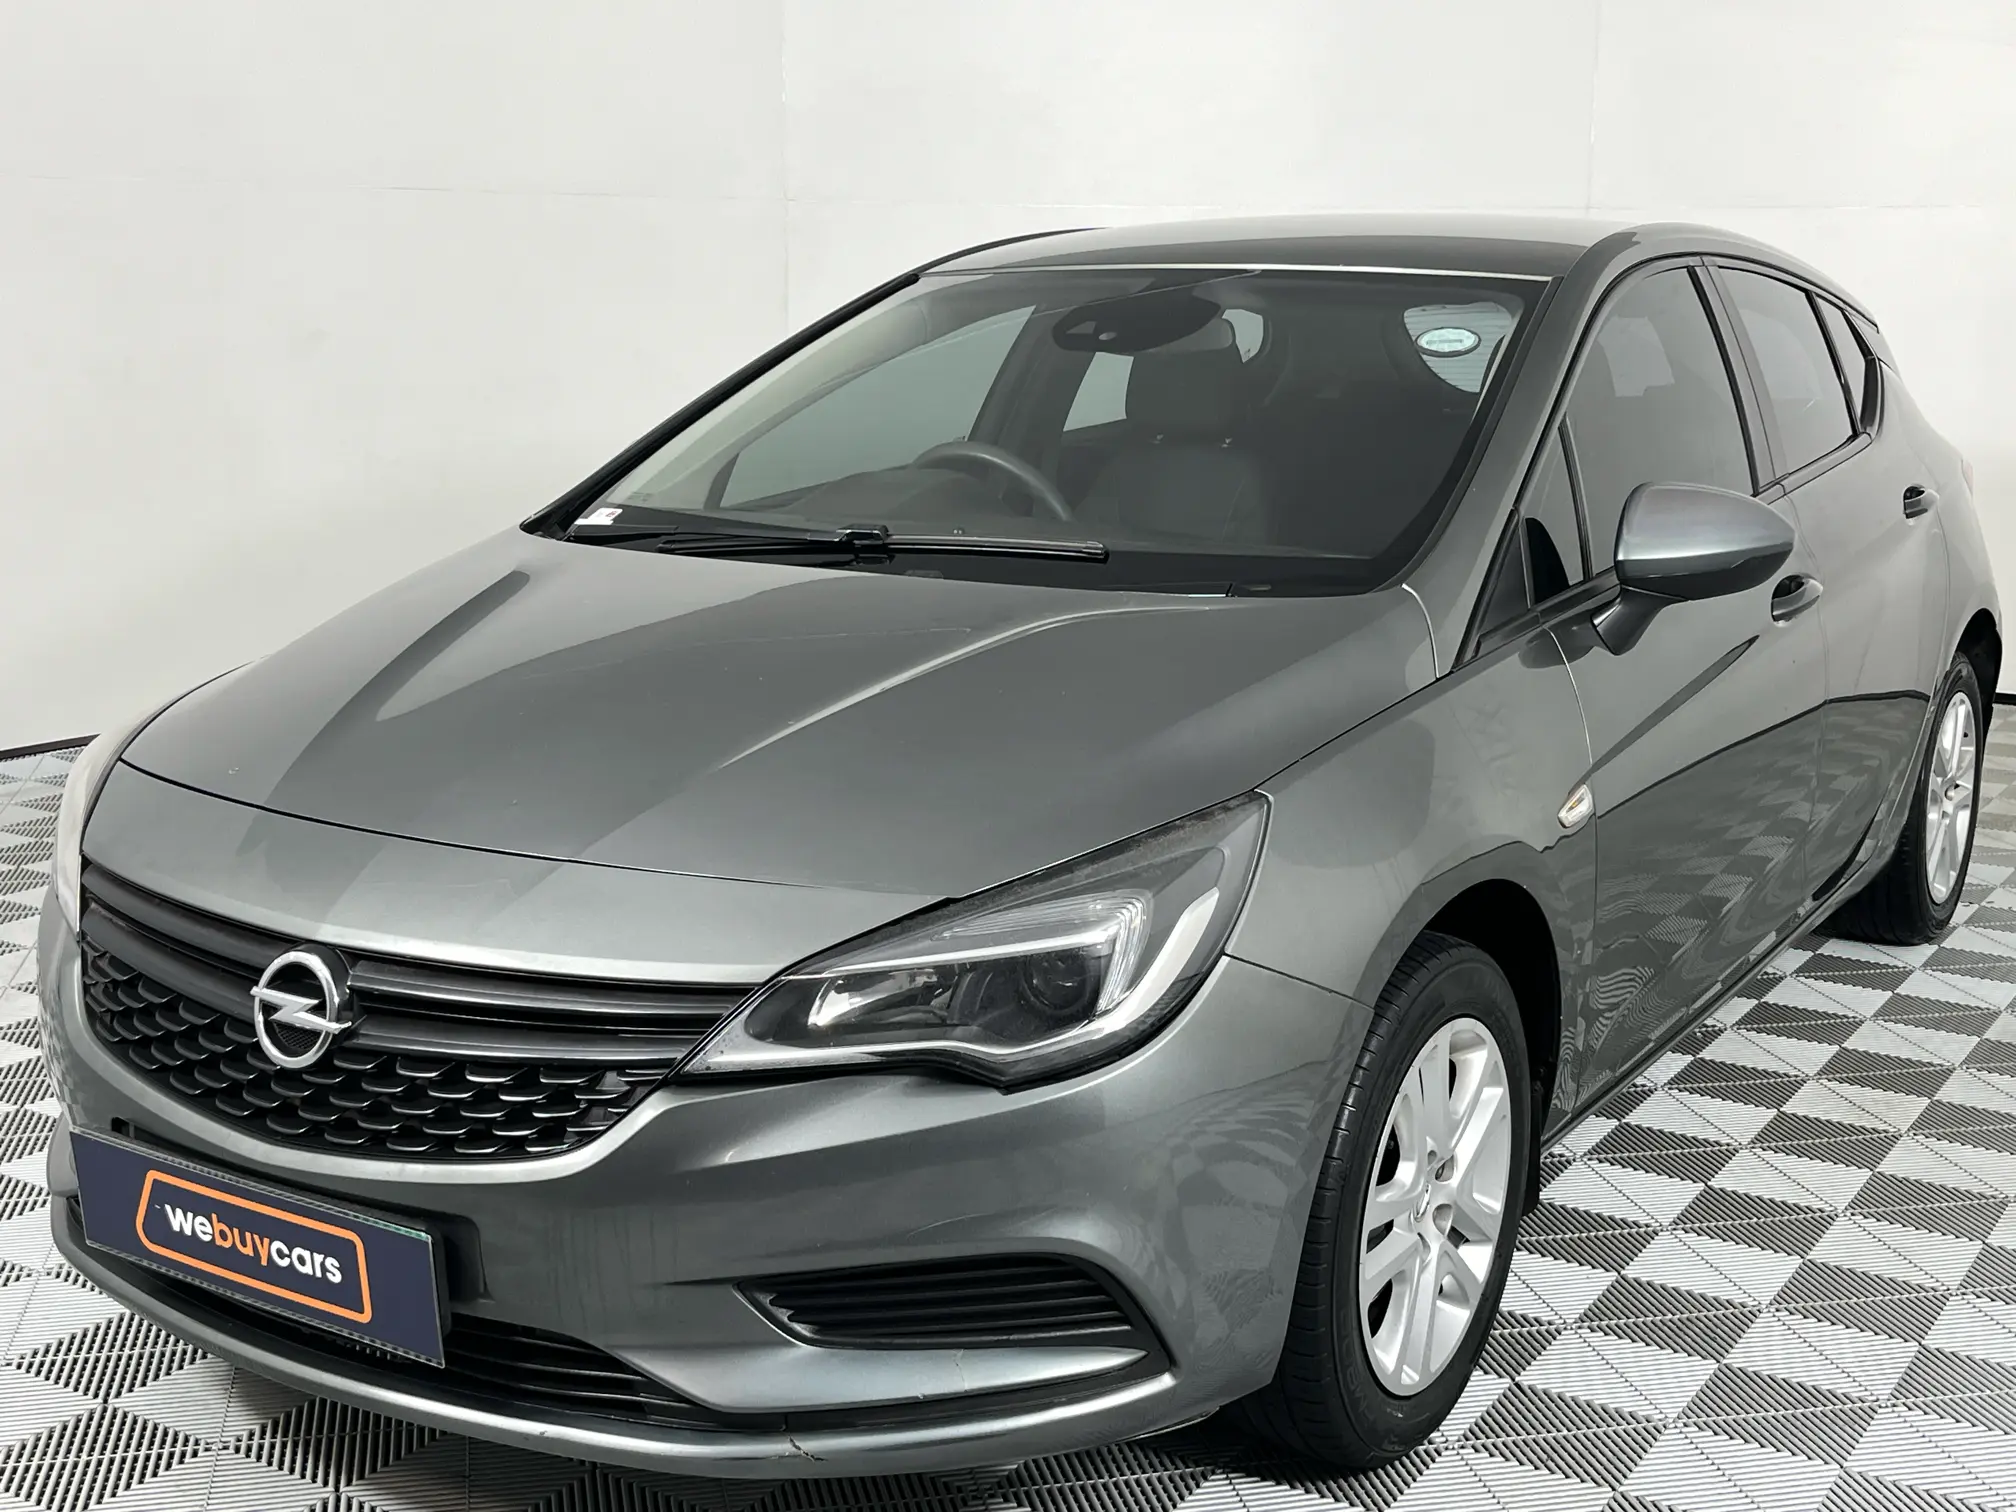 2018 Opel Astra 1.4T Enjoy (5dr)